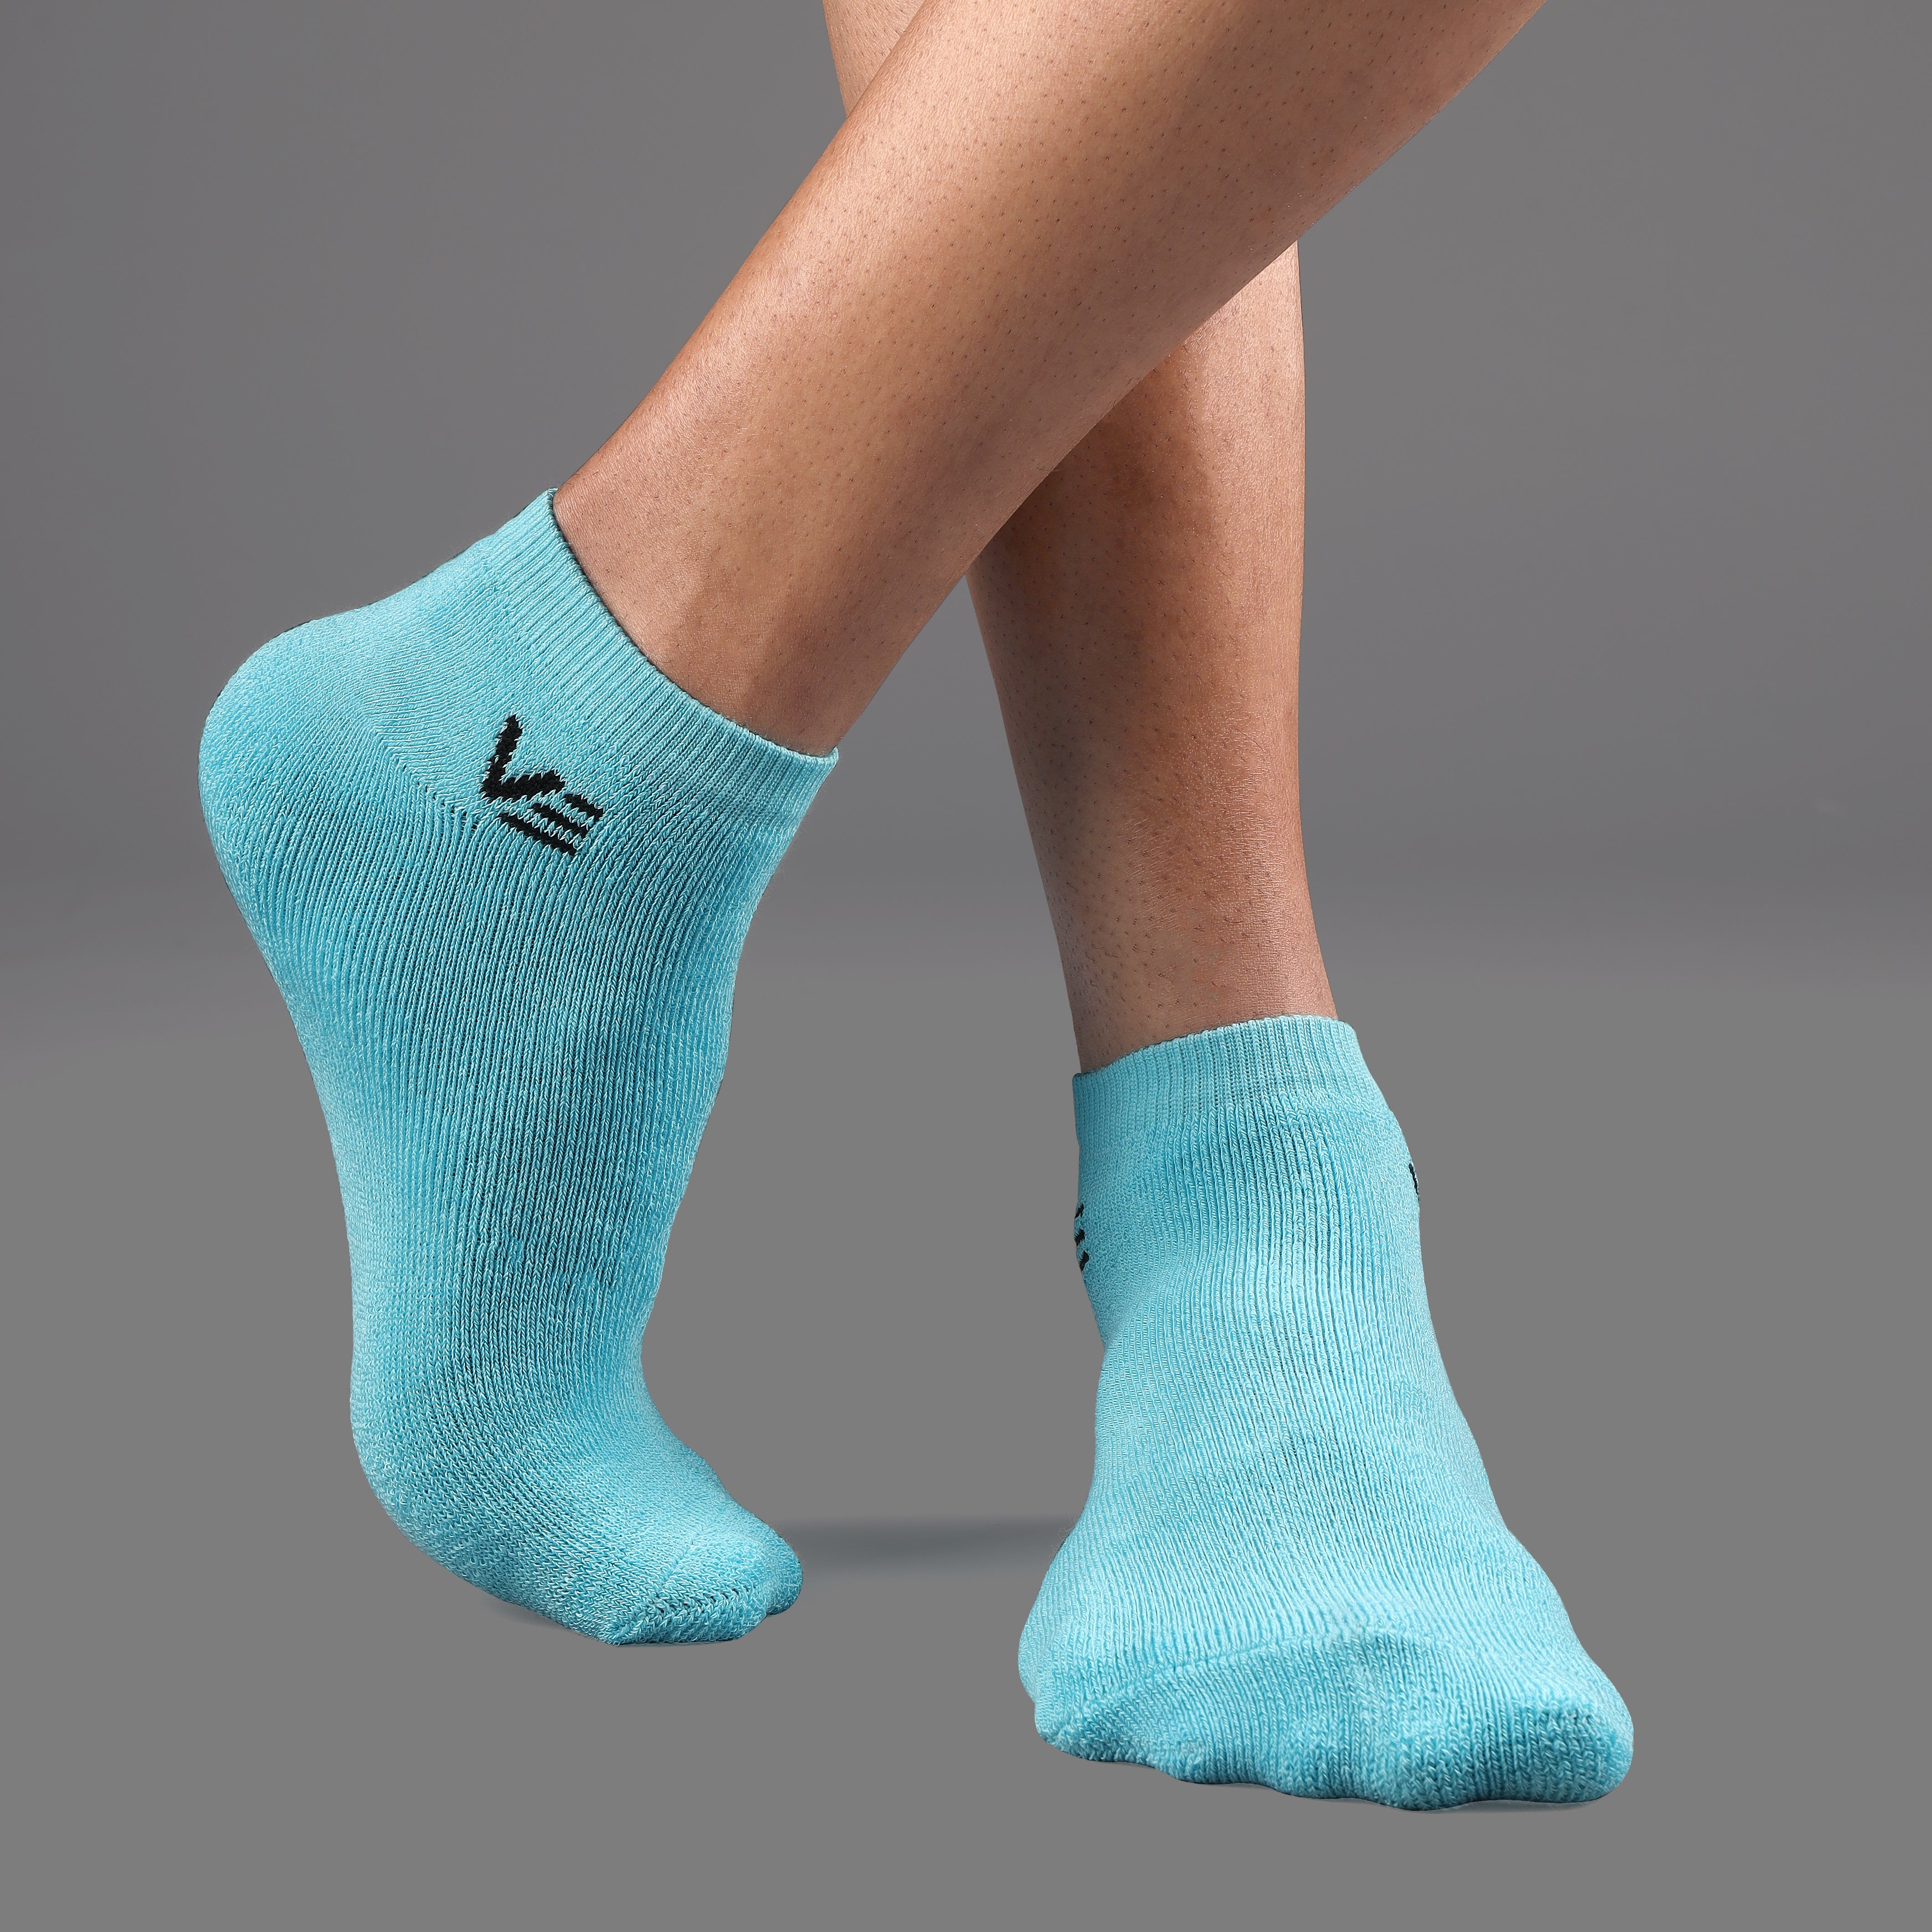 VEDCO Neon Ankle Socks (Pack of 3)